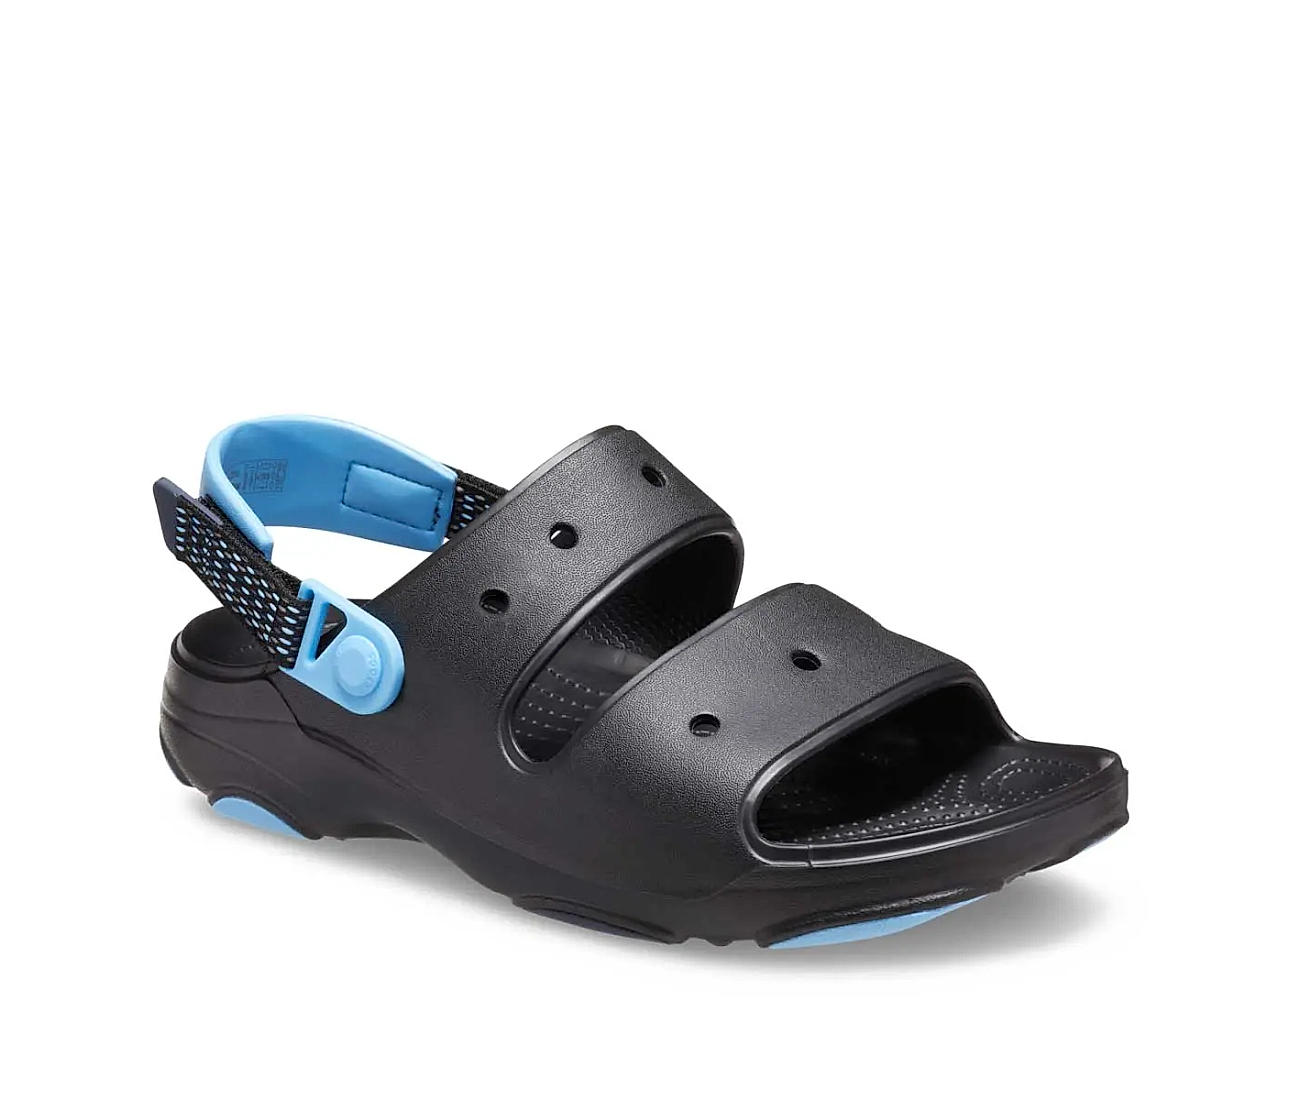 Crocs Women's Sloane Slide Sandals - Walmart.com